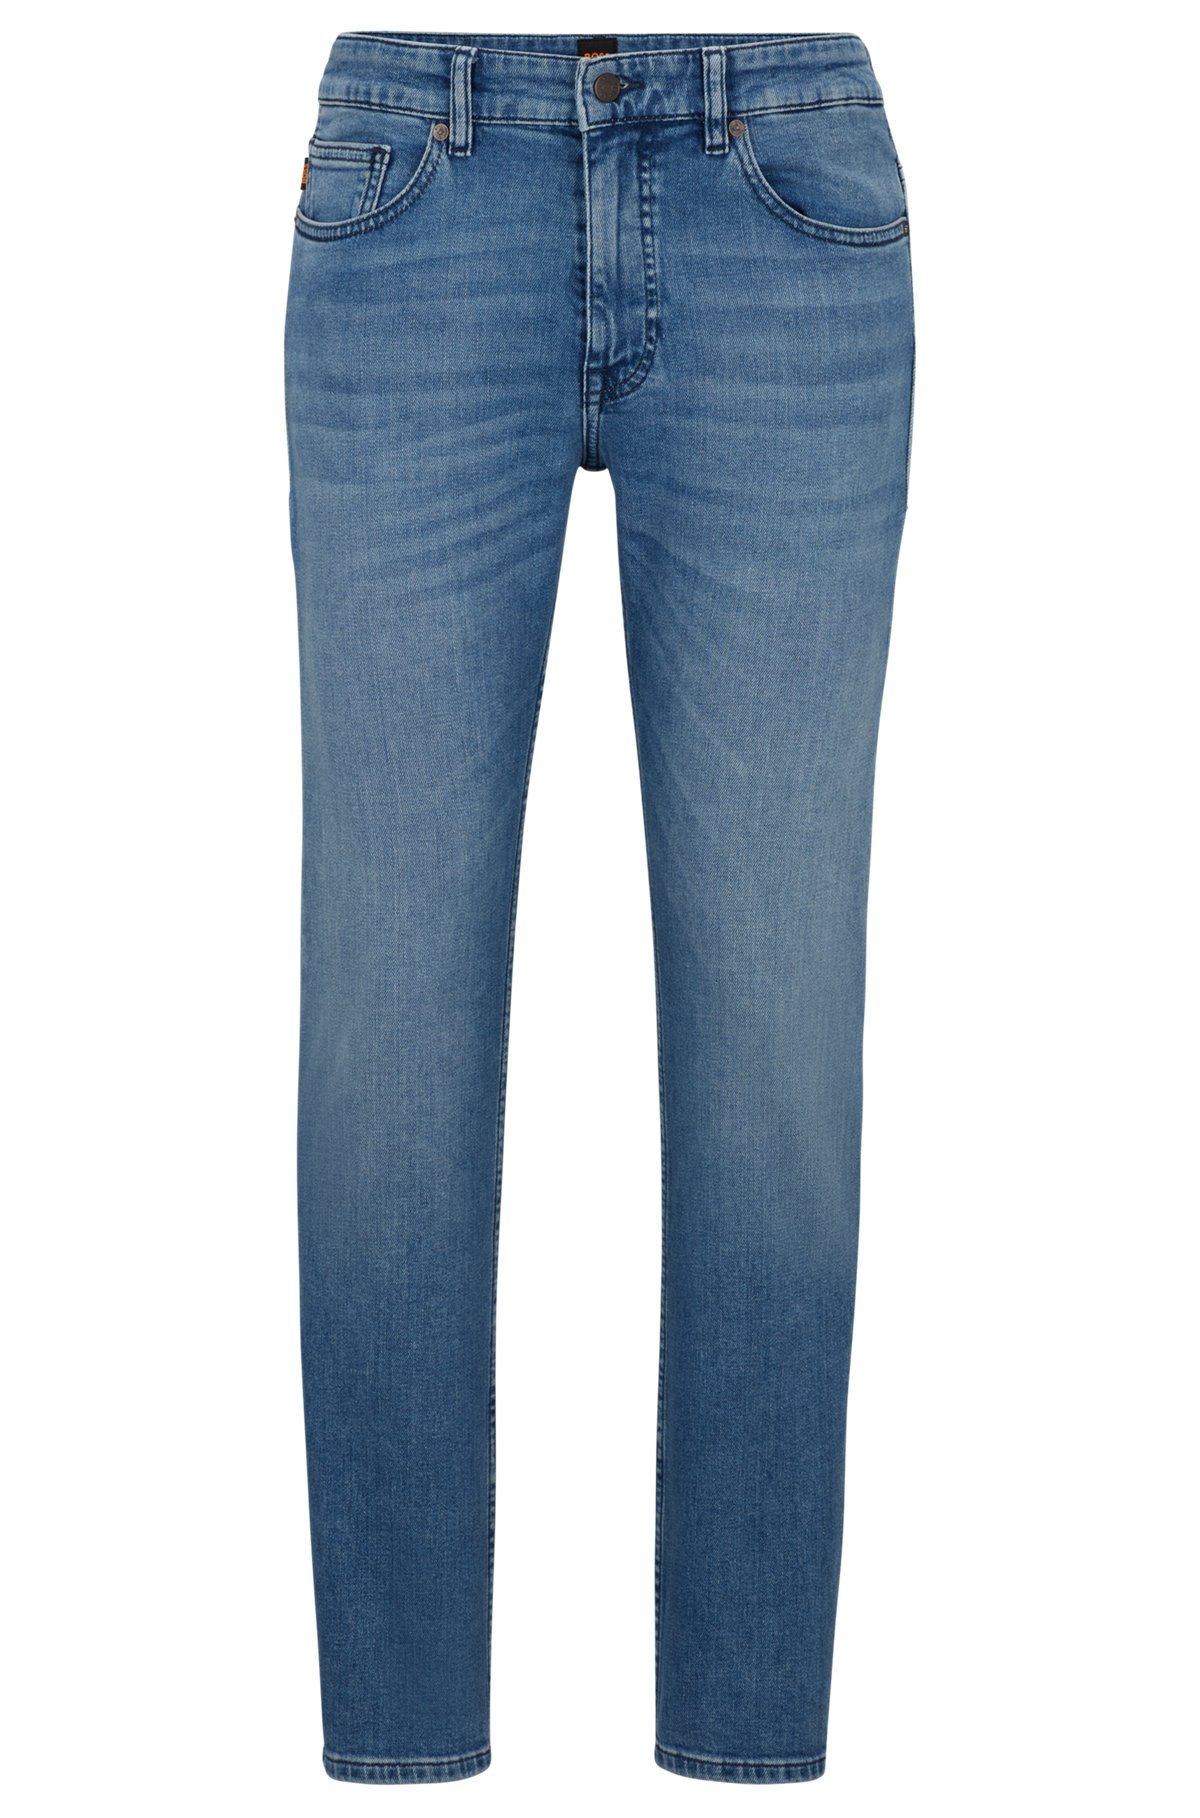 Blaue Slim-Fit Jeans aus bequemem Stretch-Denim, Blau